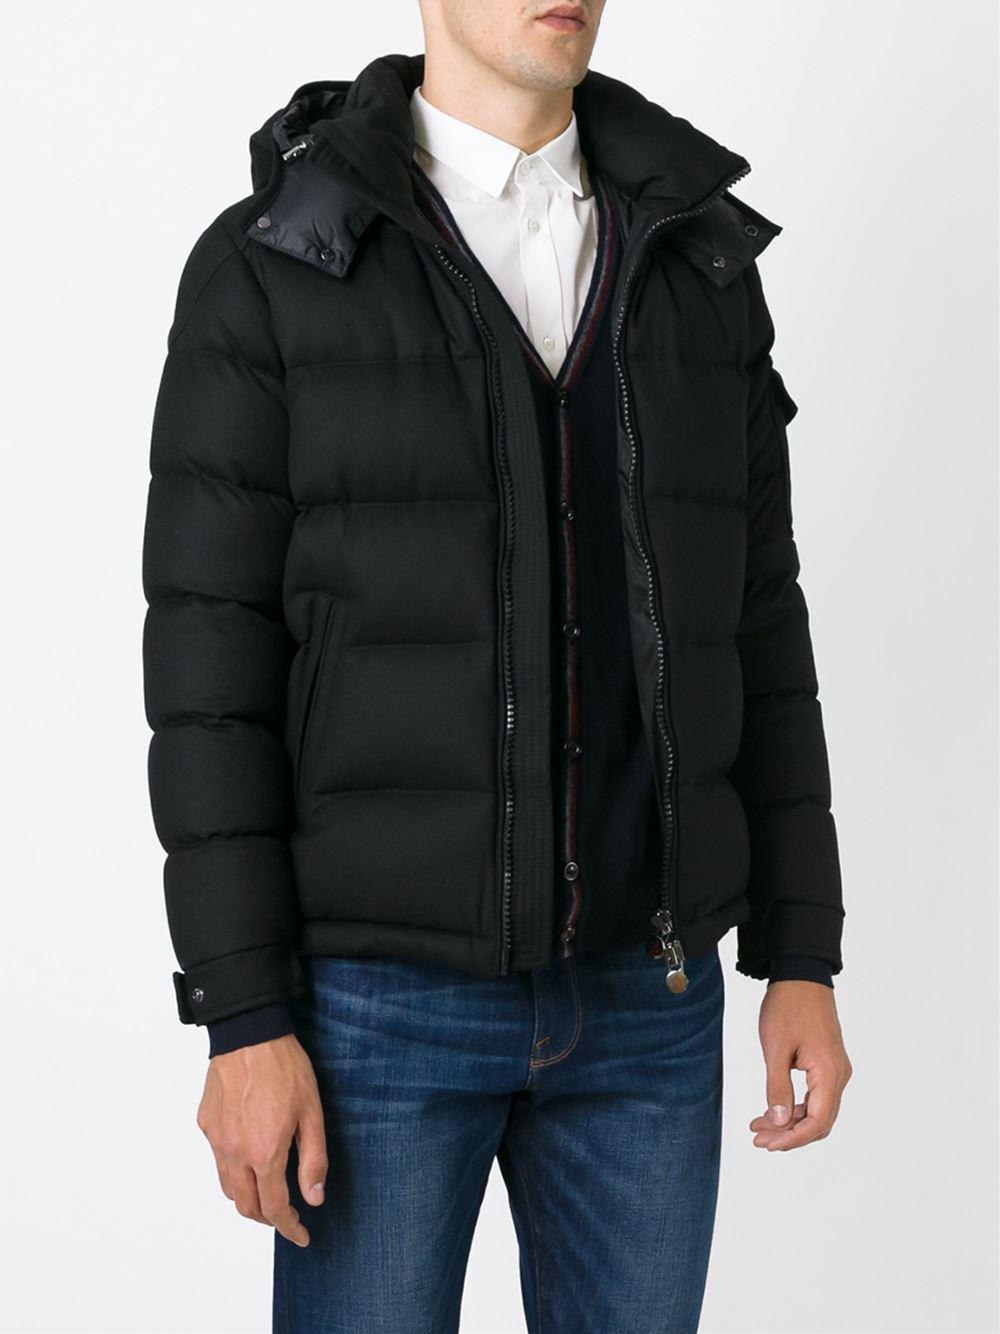 Moncler Wool 'montgenevre' Padded Jacket in Black for Men - Lyst